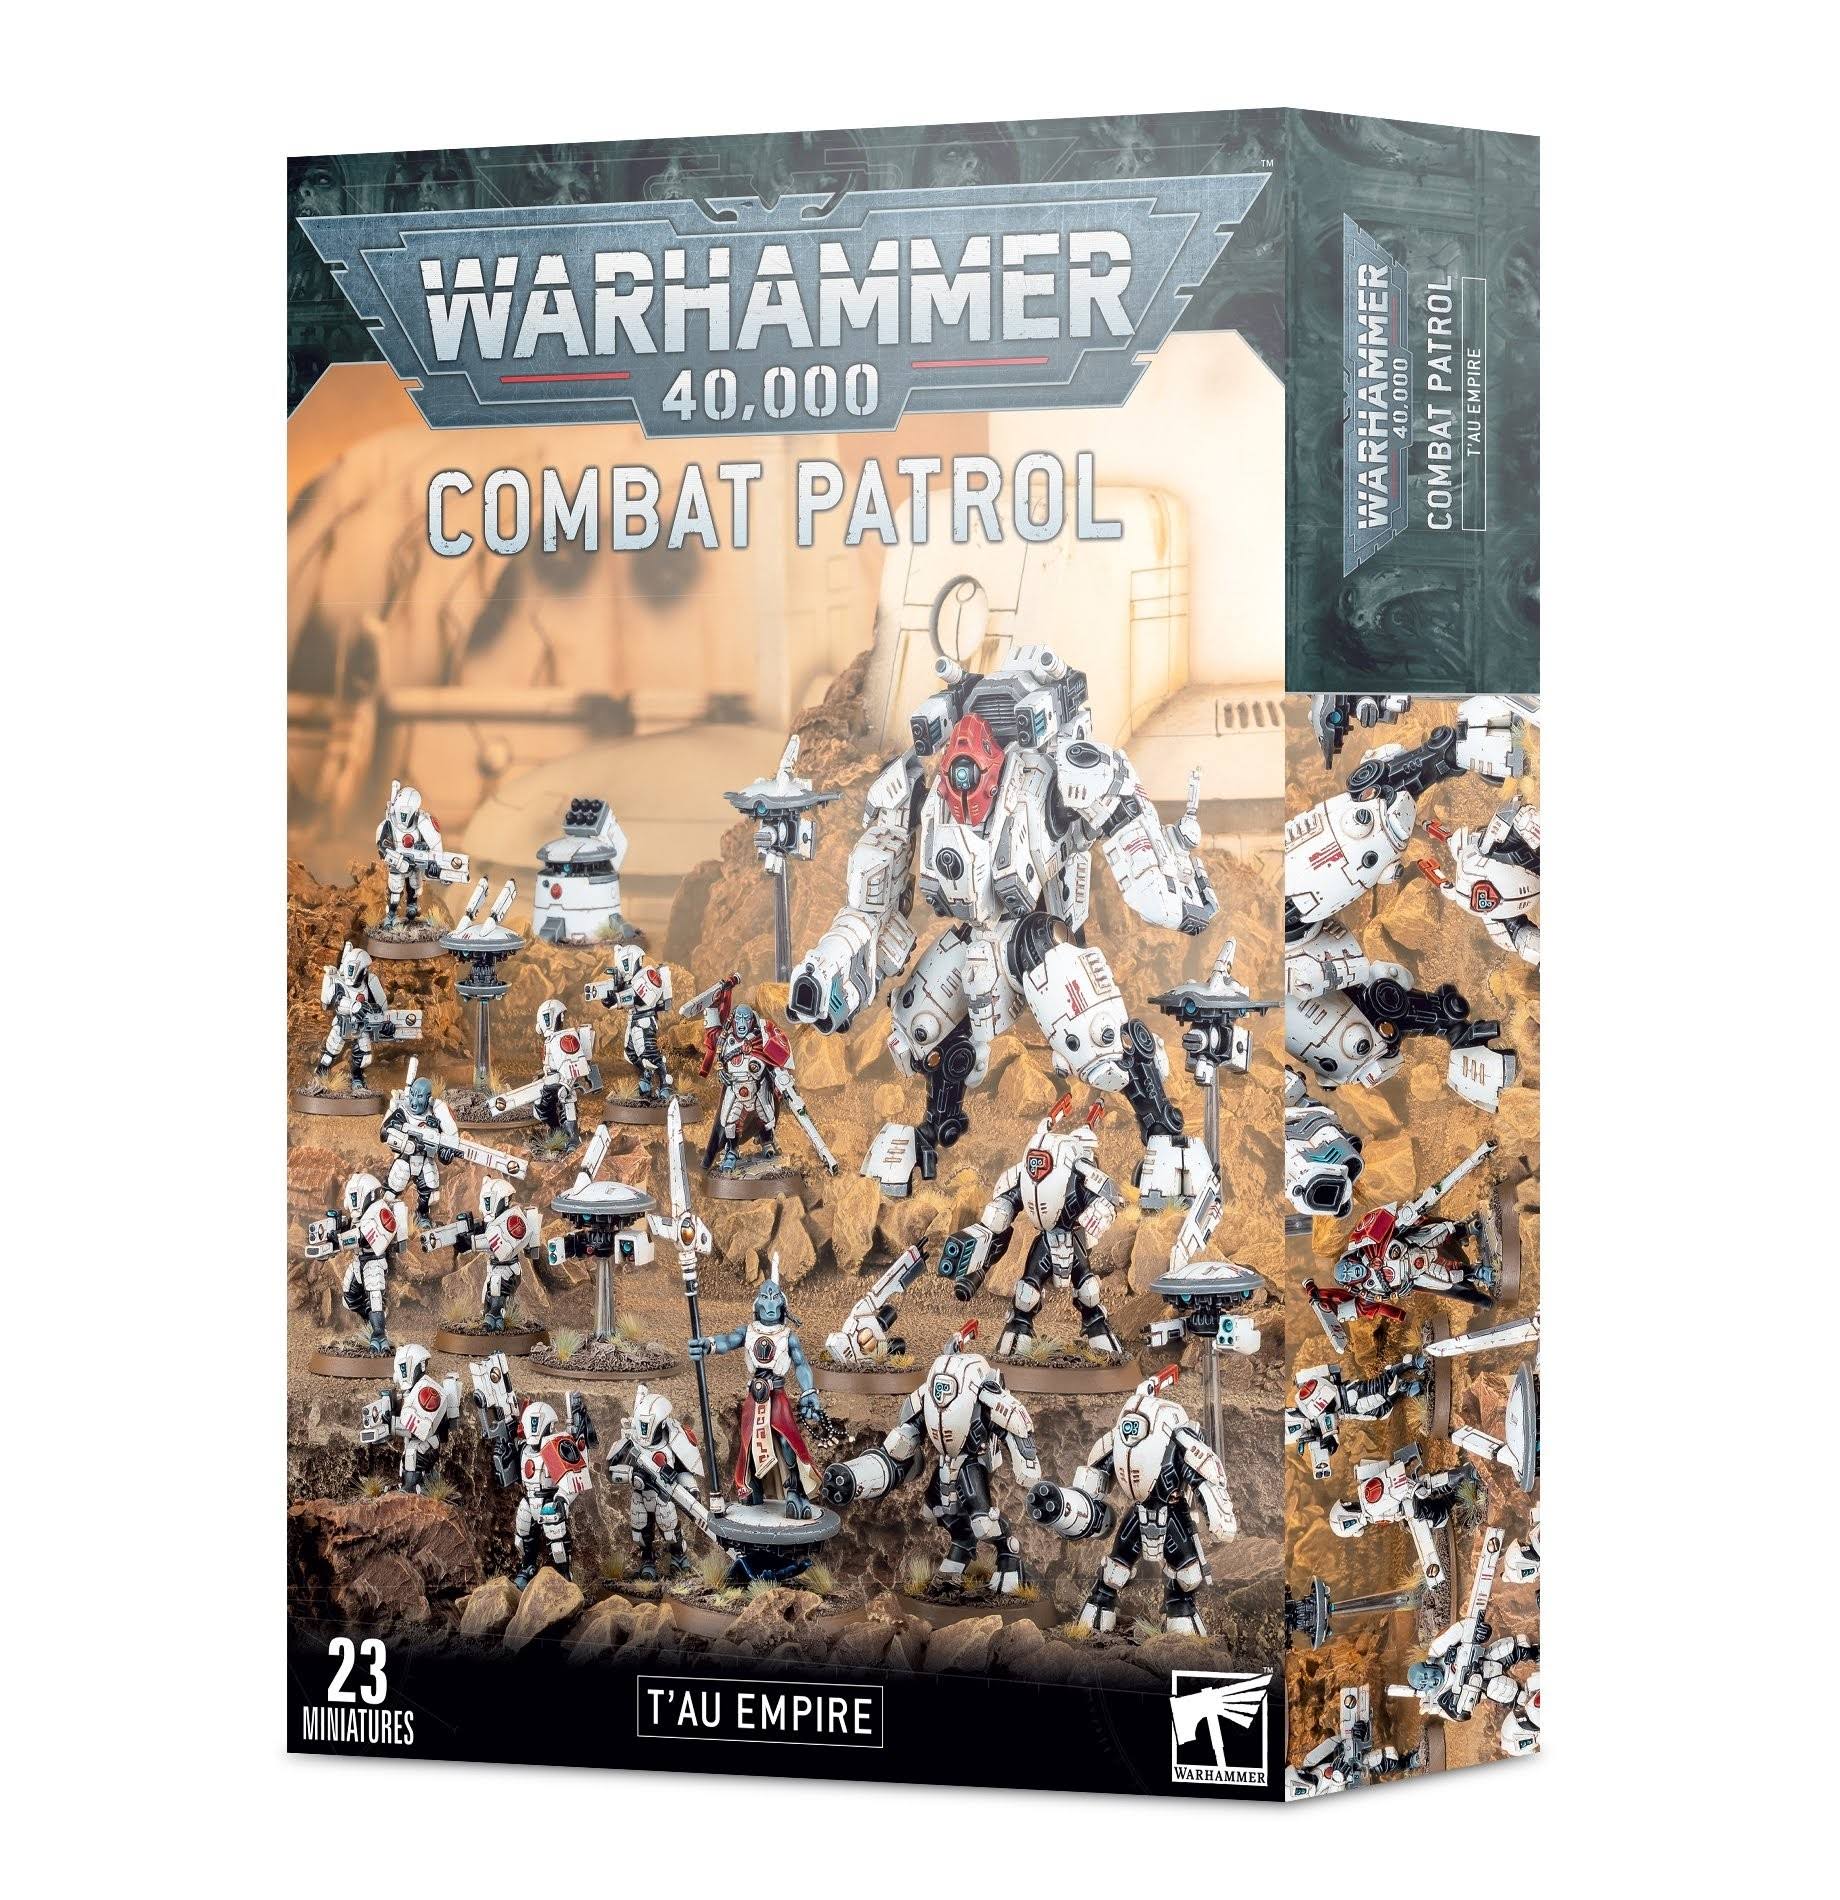 Warhammer 40K Combat Patrol: Tau Empire